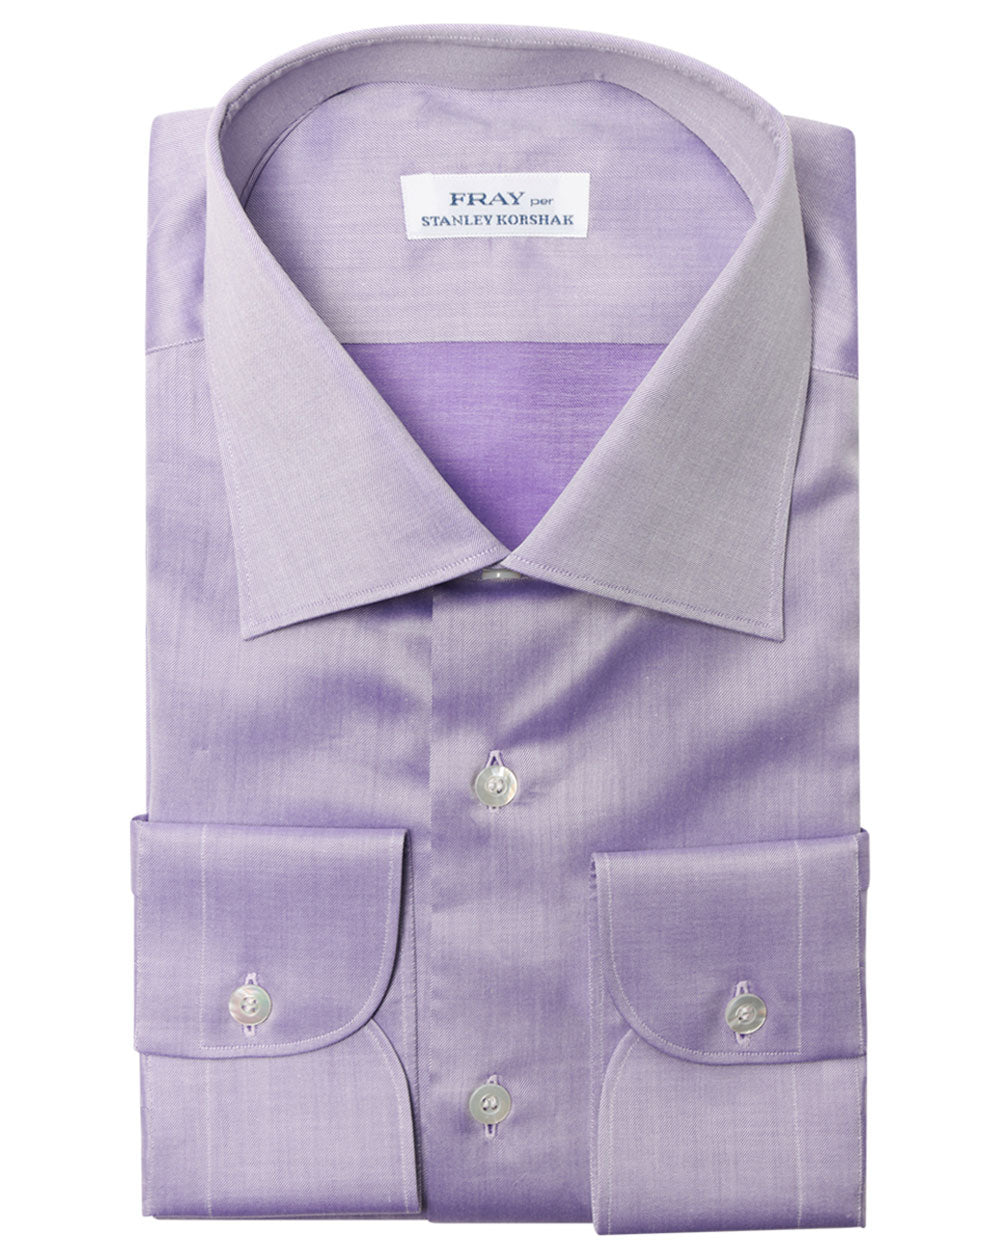 Heathered Lavender Cotton Dress Shirt